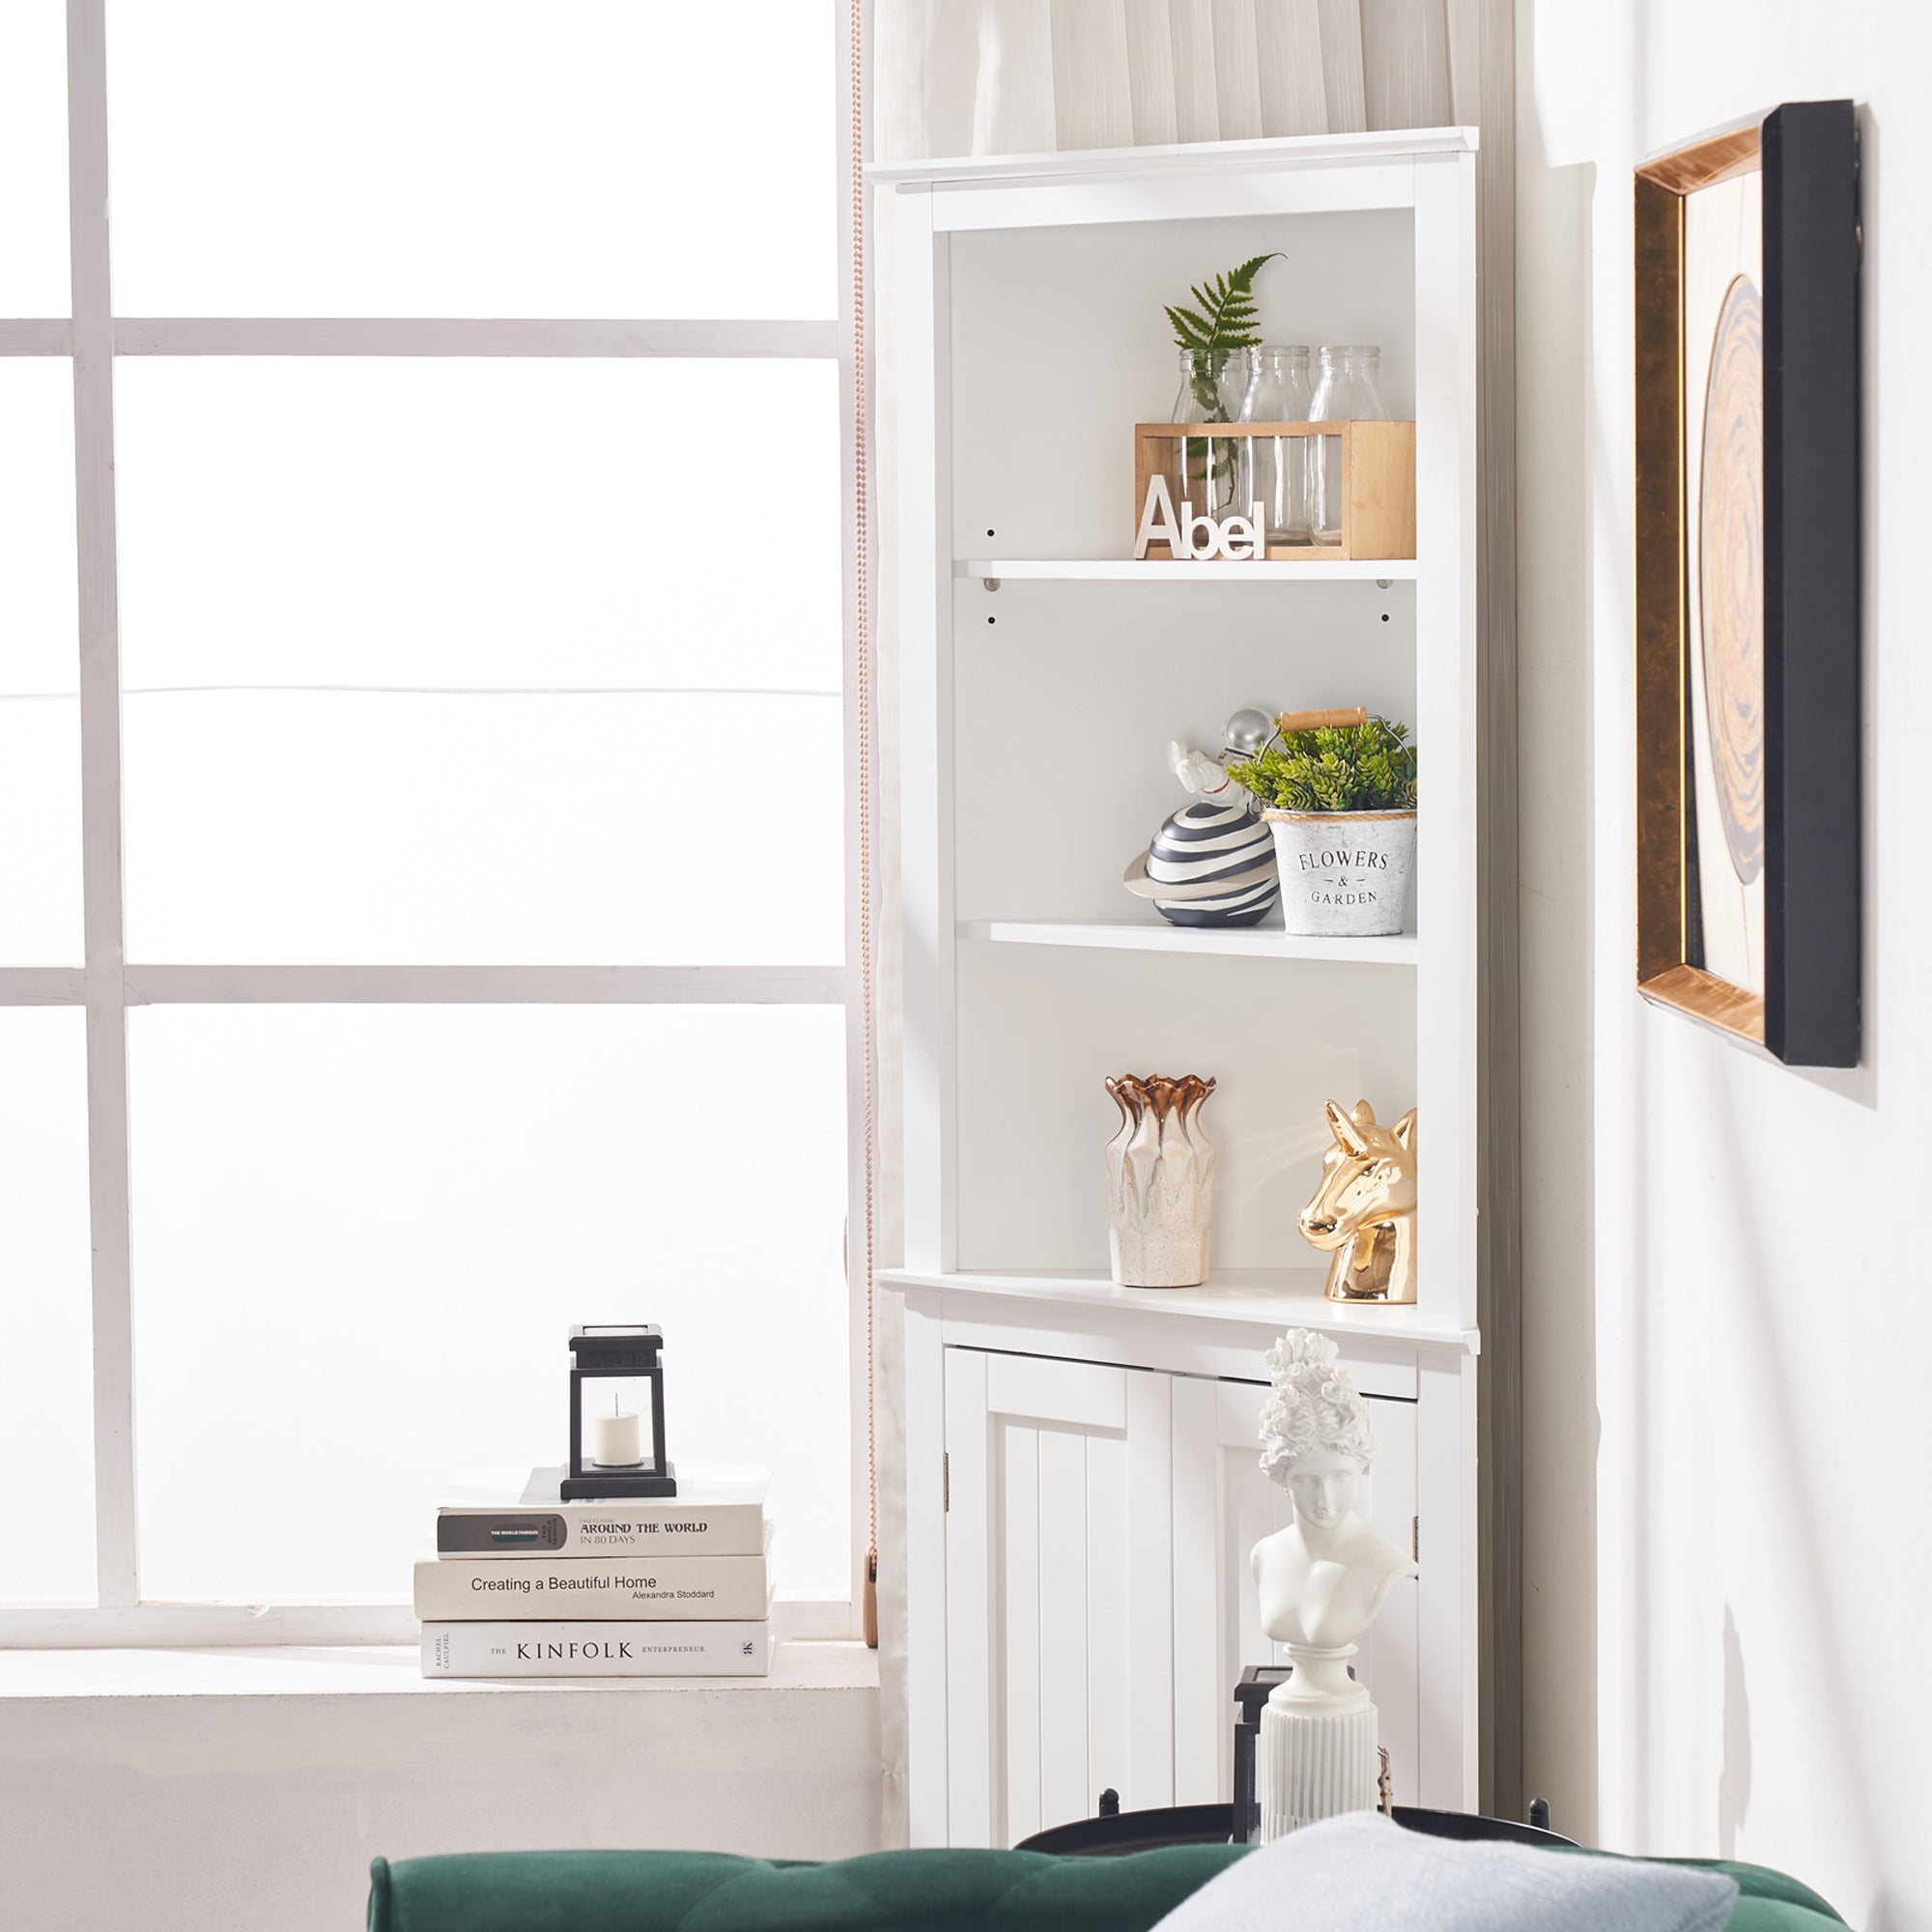 ivinta Tall Corner Cabinet with Two Doors, Adjustable Shelves and Waterproof Design, Free Standing Corner Storage Cabinet for Bathroom, Living Room, Kitchen or Bedroom